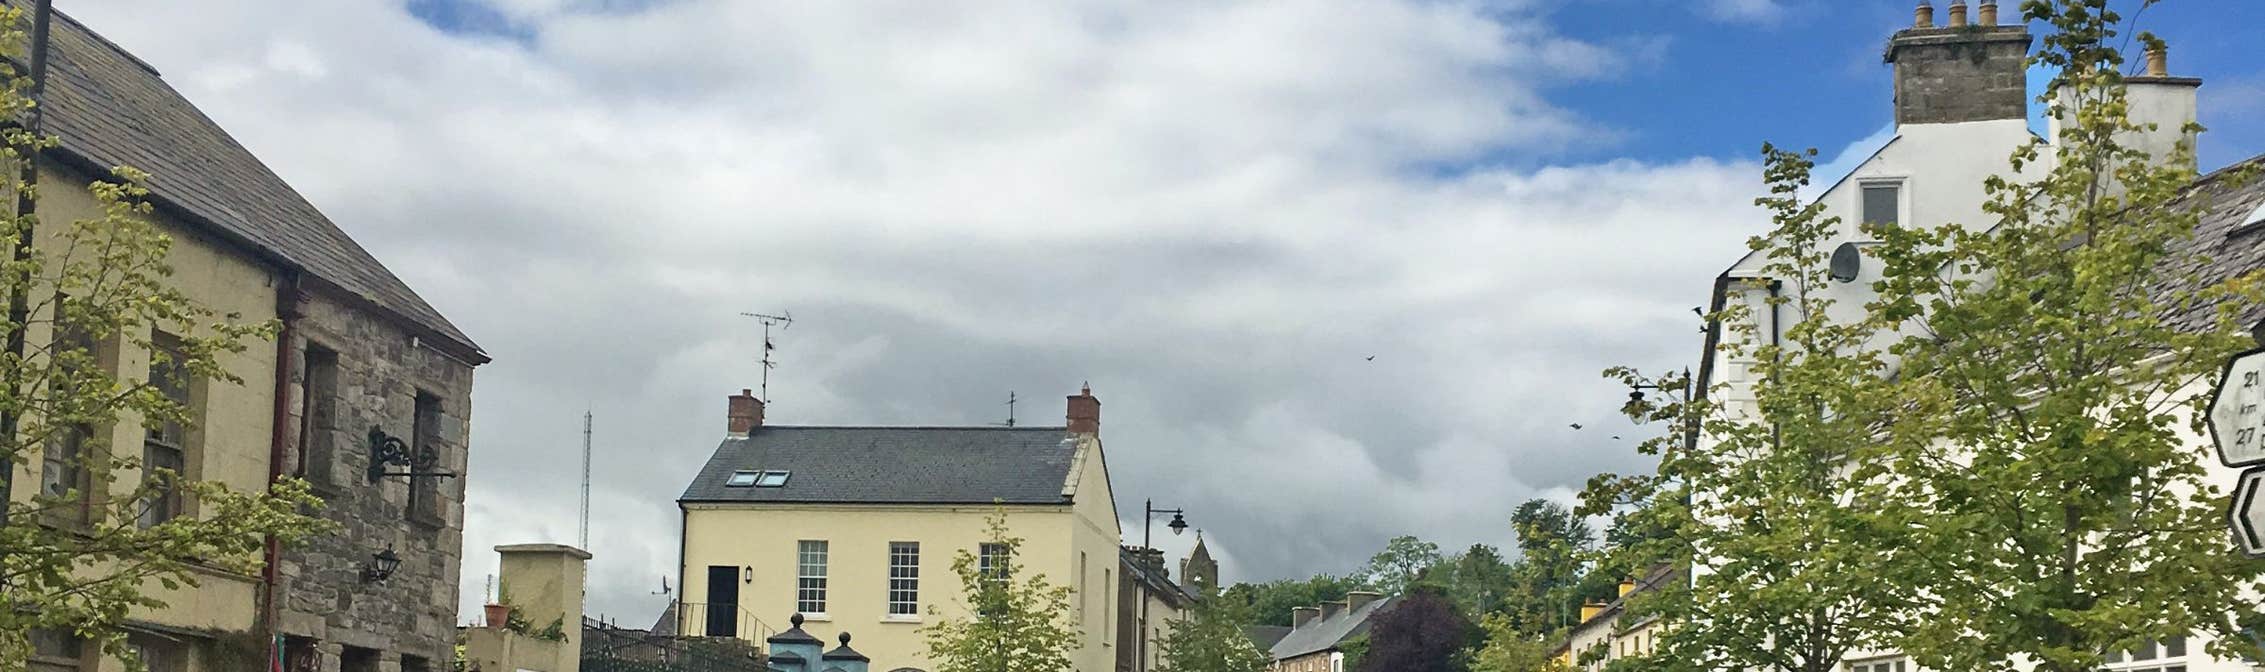 Image of Pettigo town in County Donegal